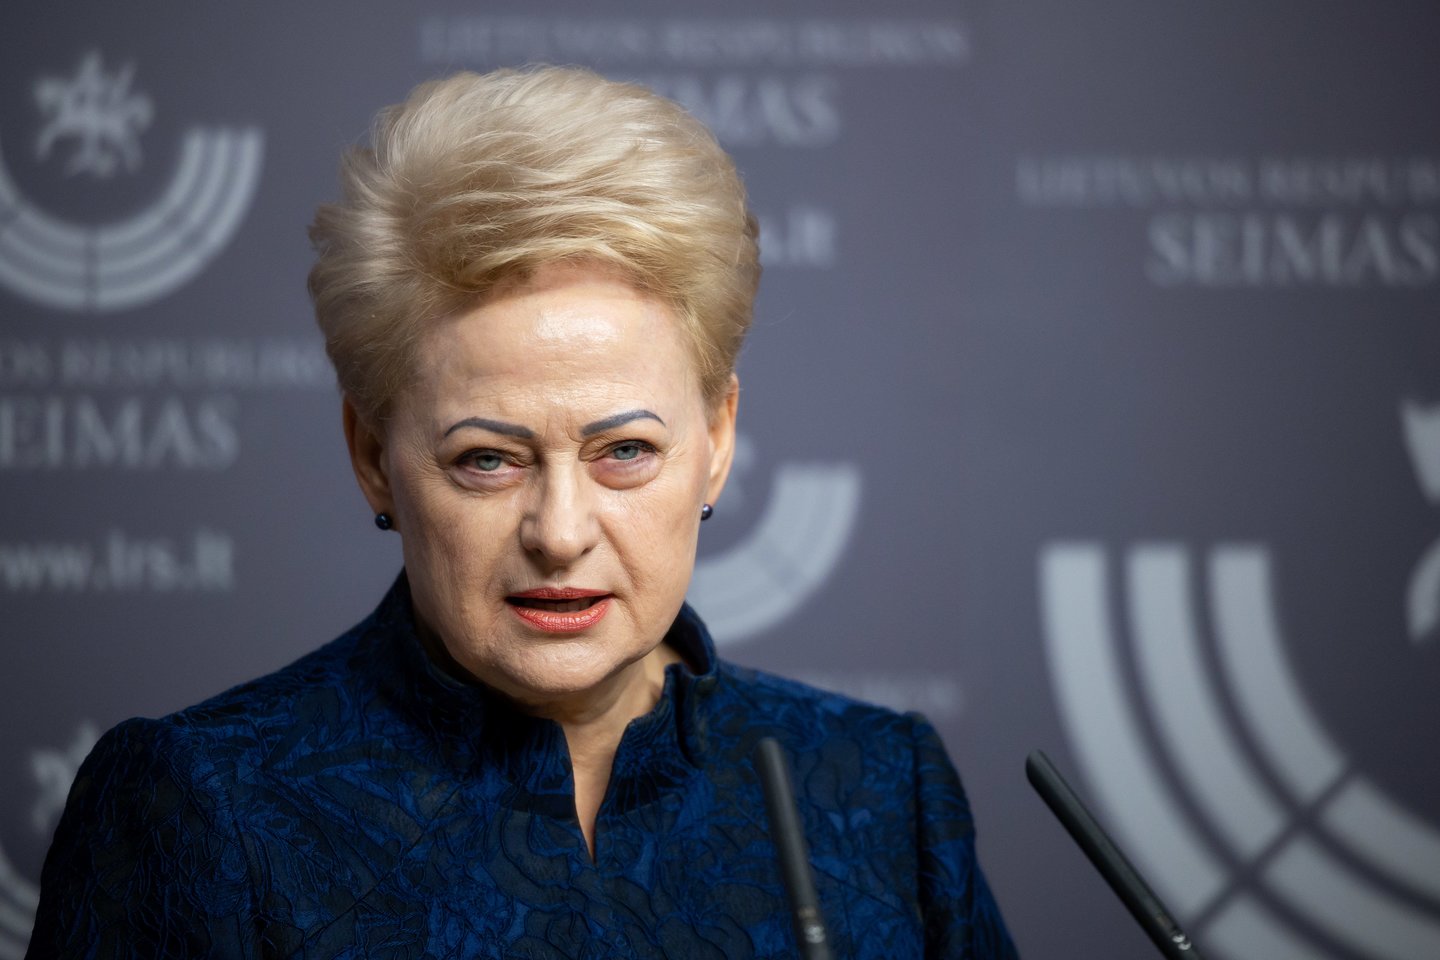  D.Grybauskaitė<br> A.Ufarto/ELTA nuotr.